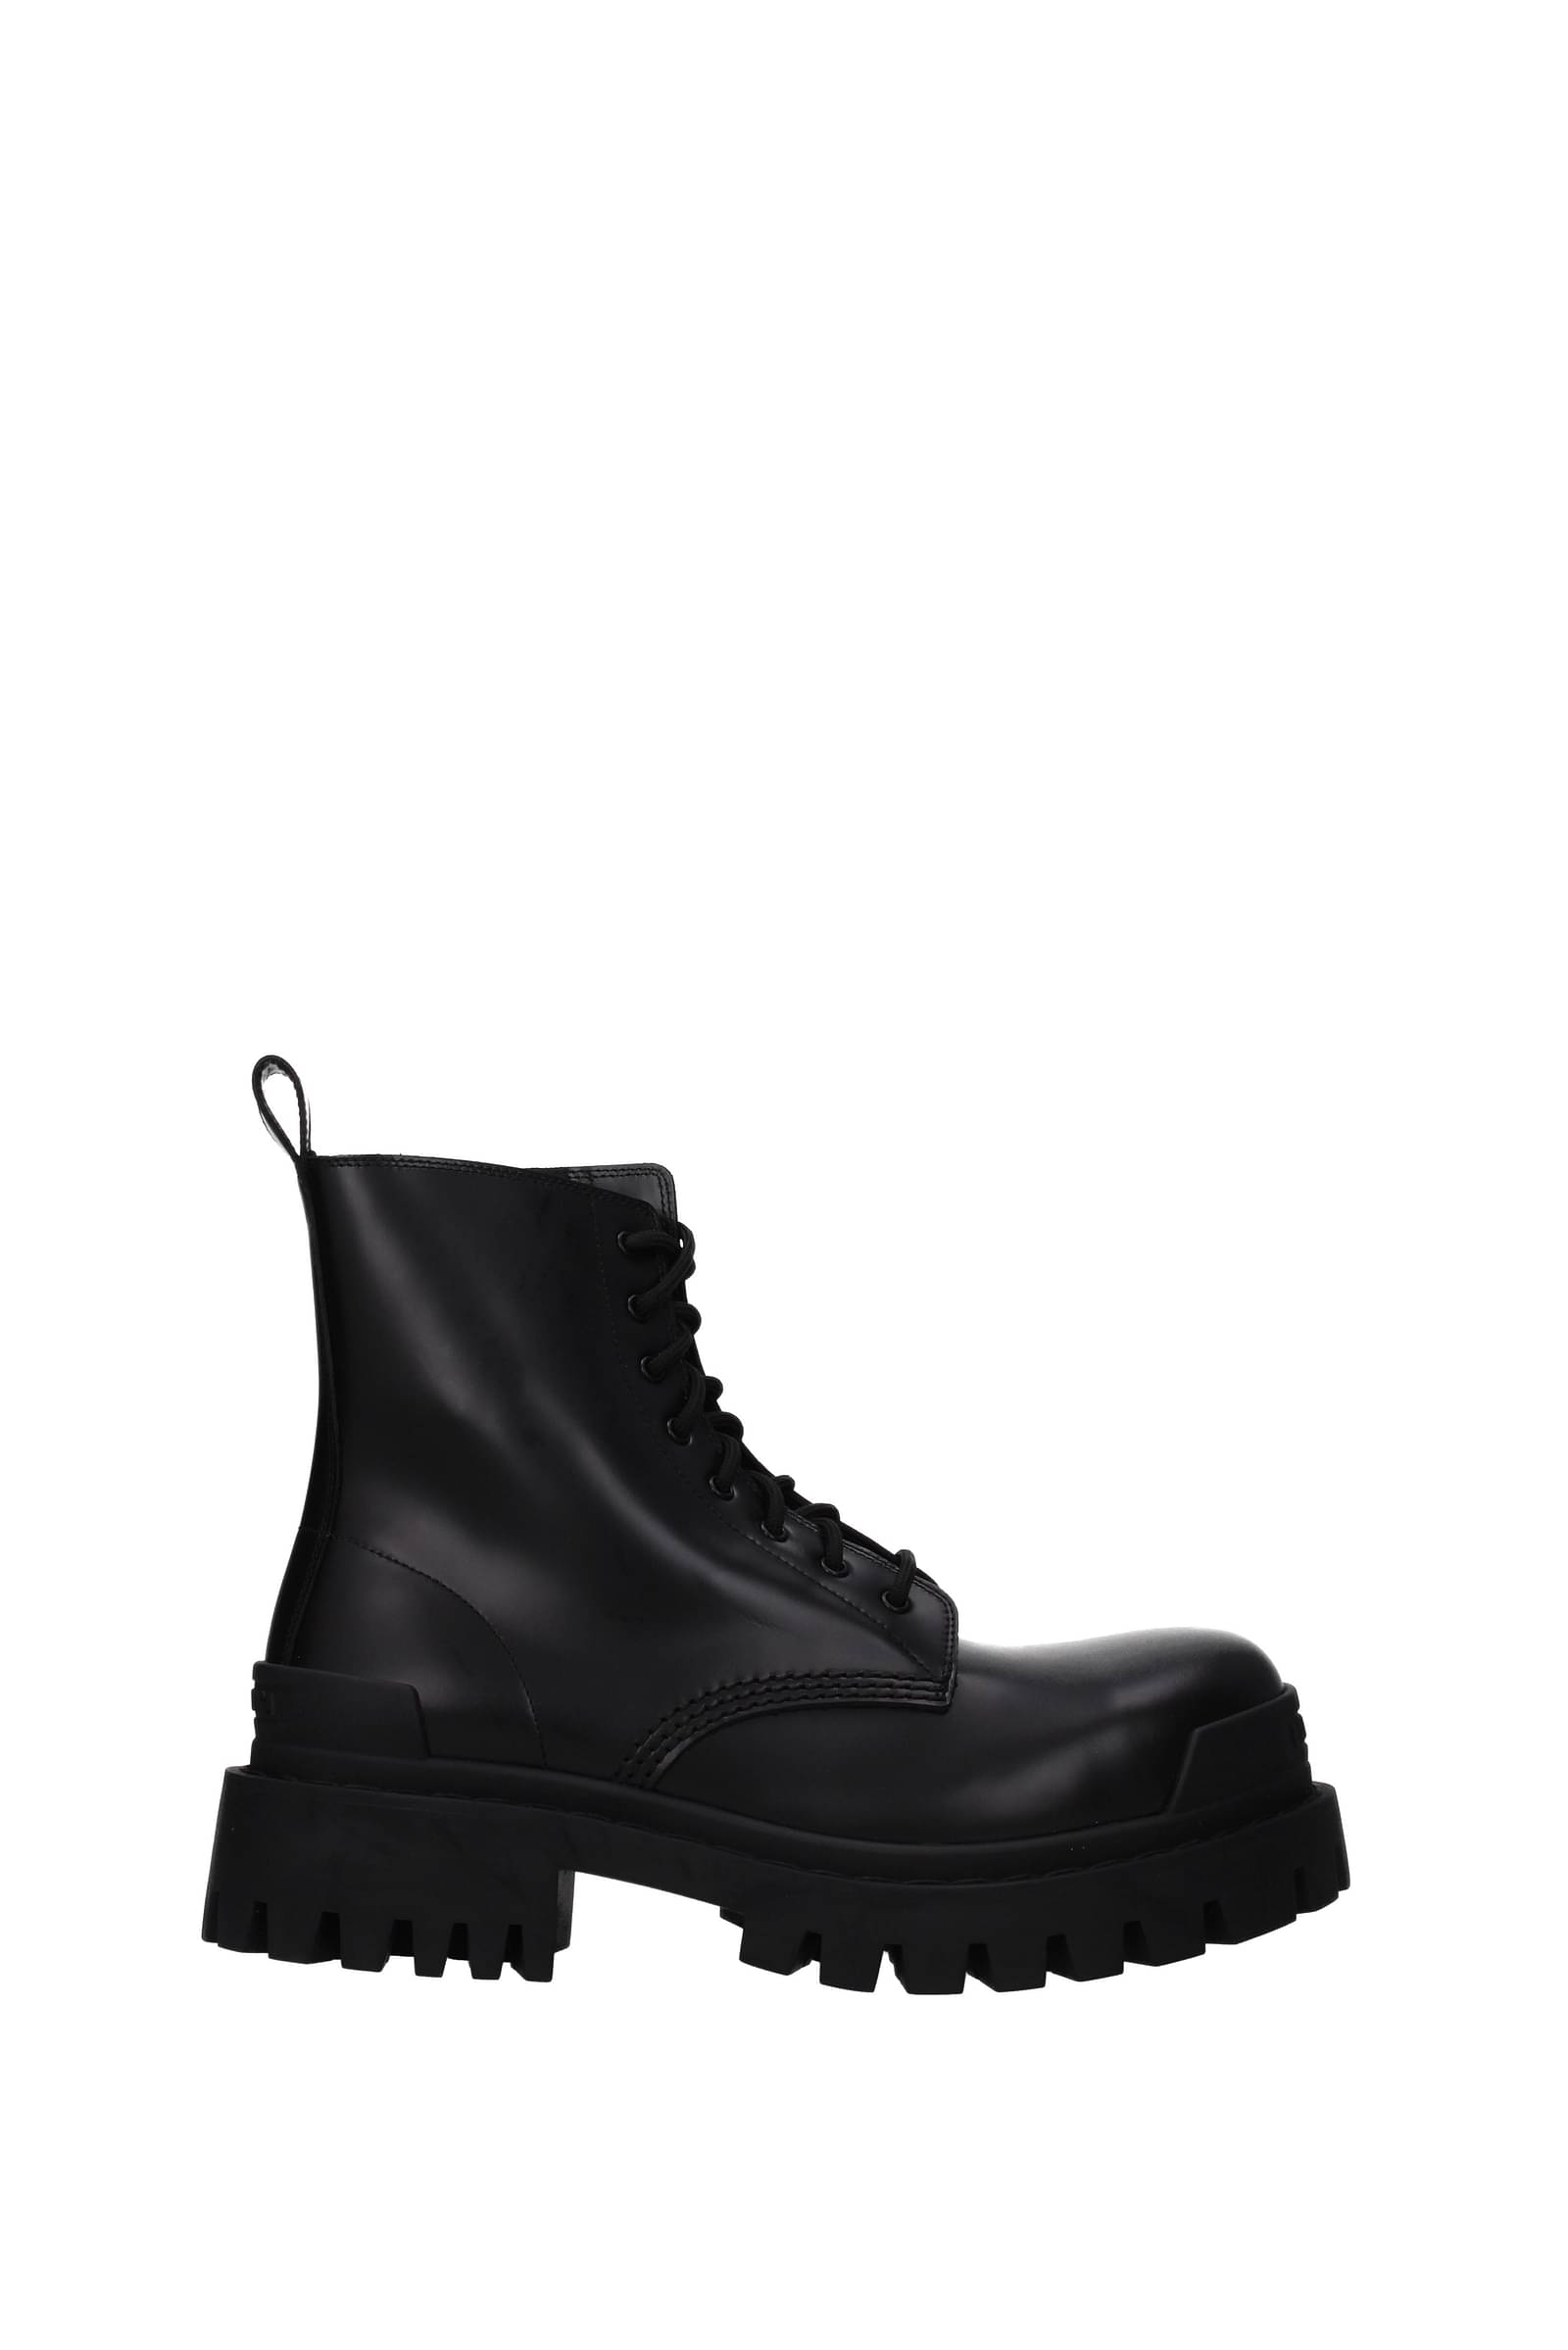 Balenciaga Ankle boots Women 590974WA9601000 Leather 596,25€